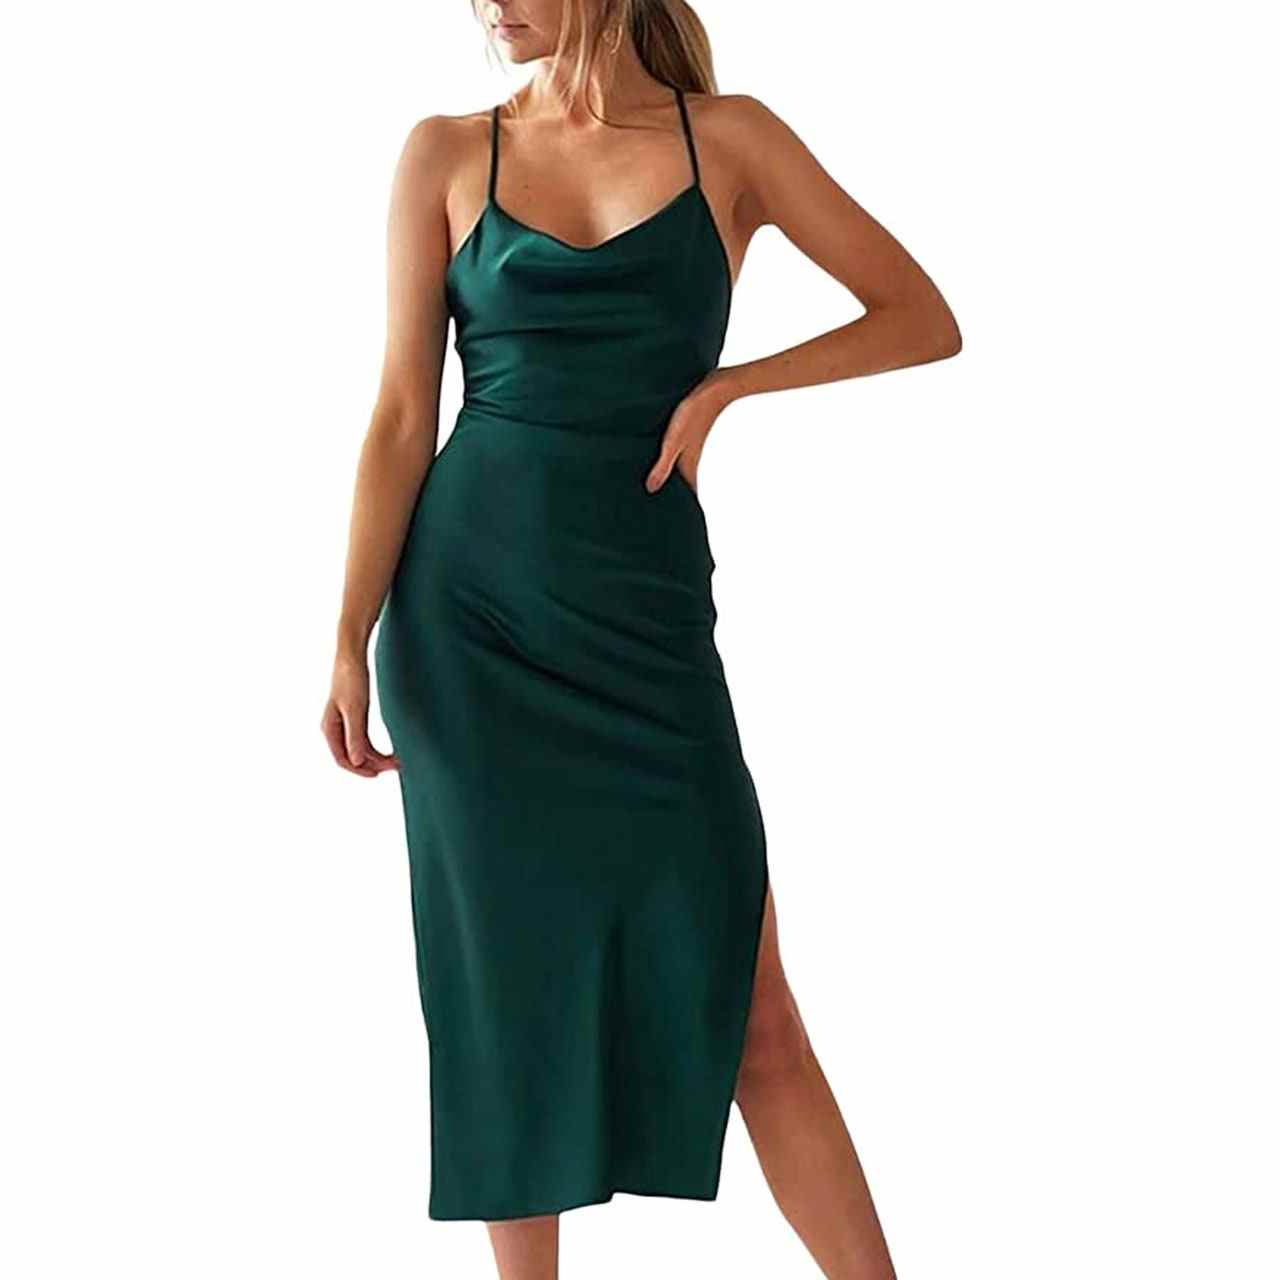 Xxxiticat Women's Sleeveless Spaghetti Strap Satin Dress